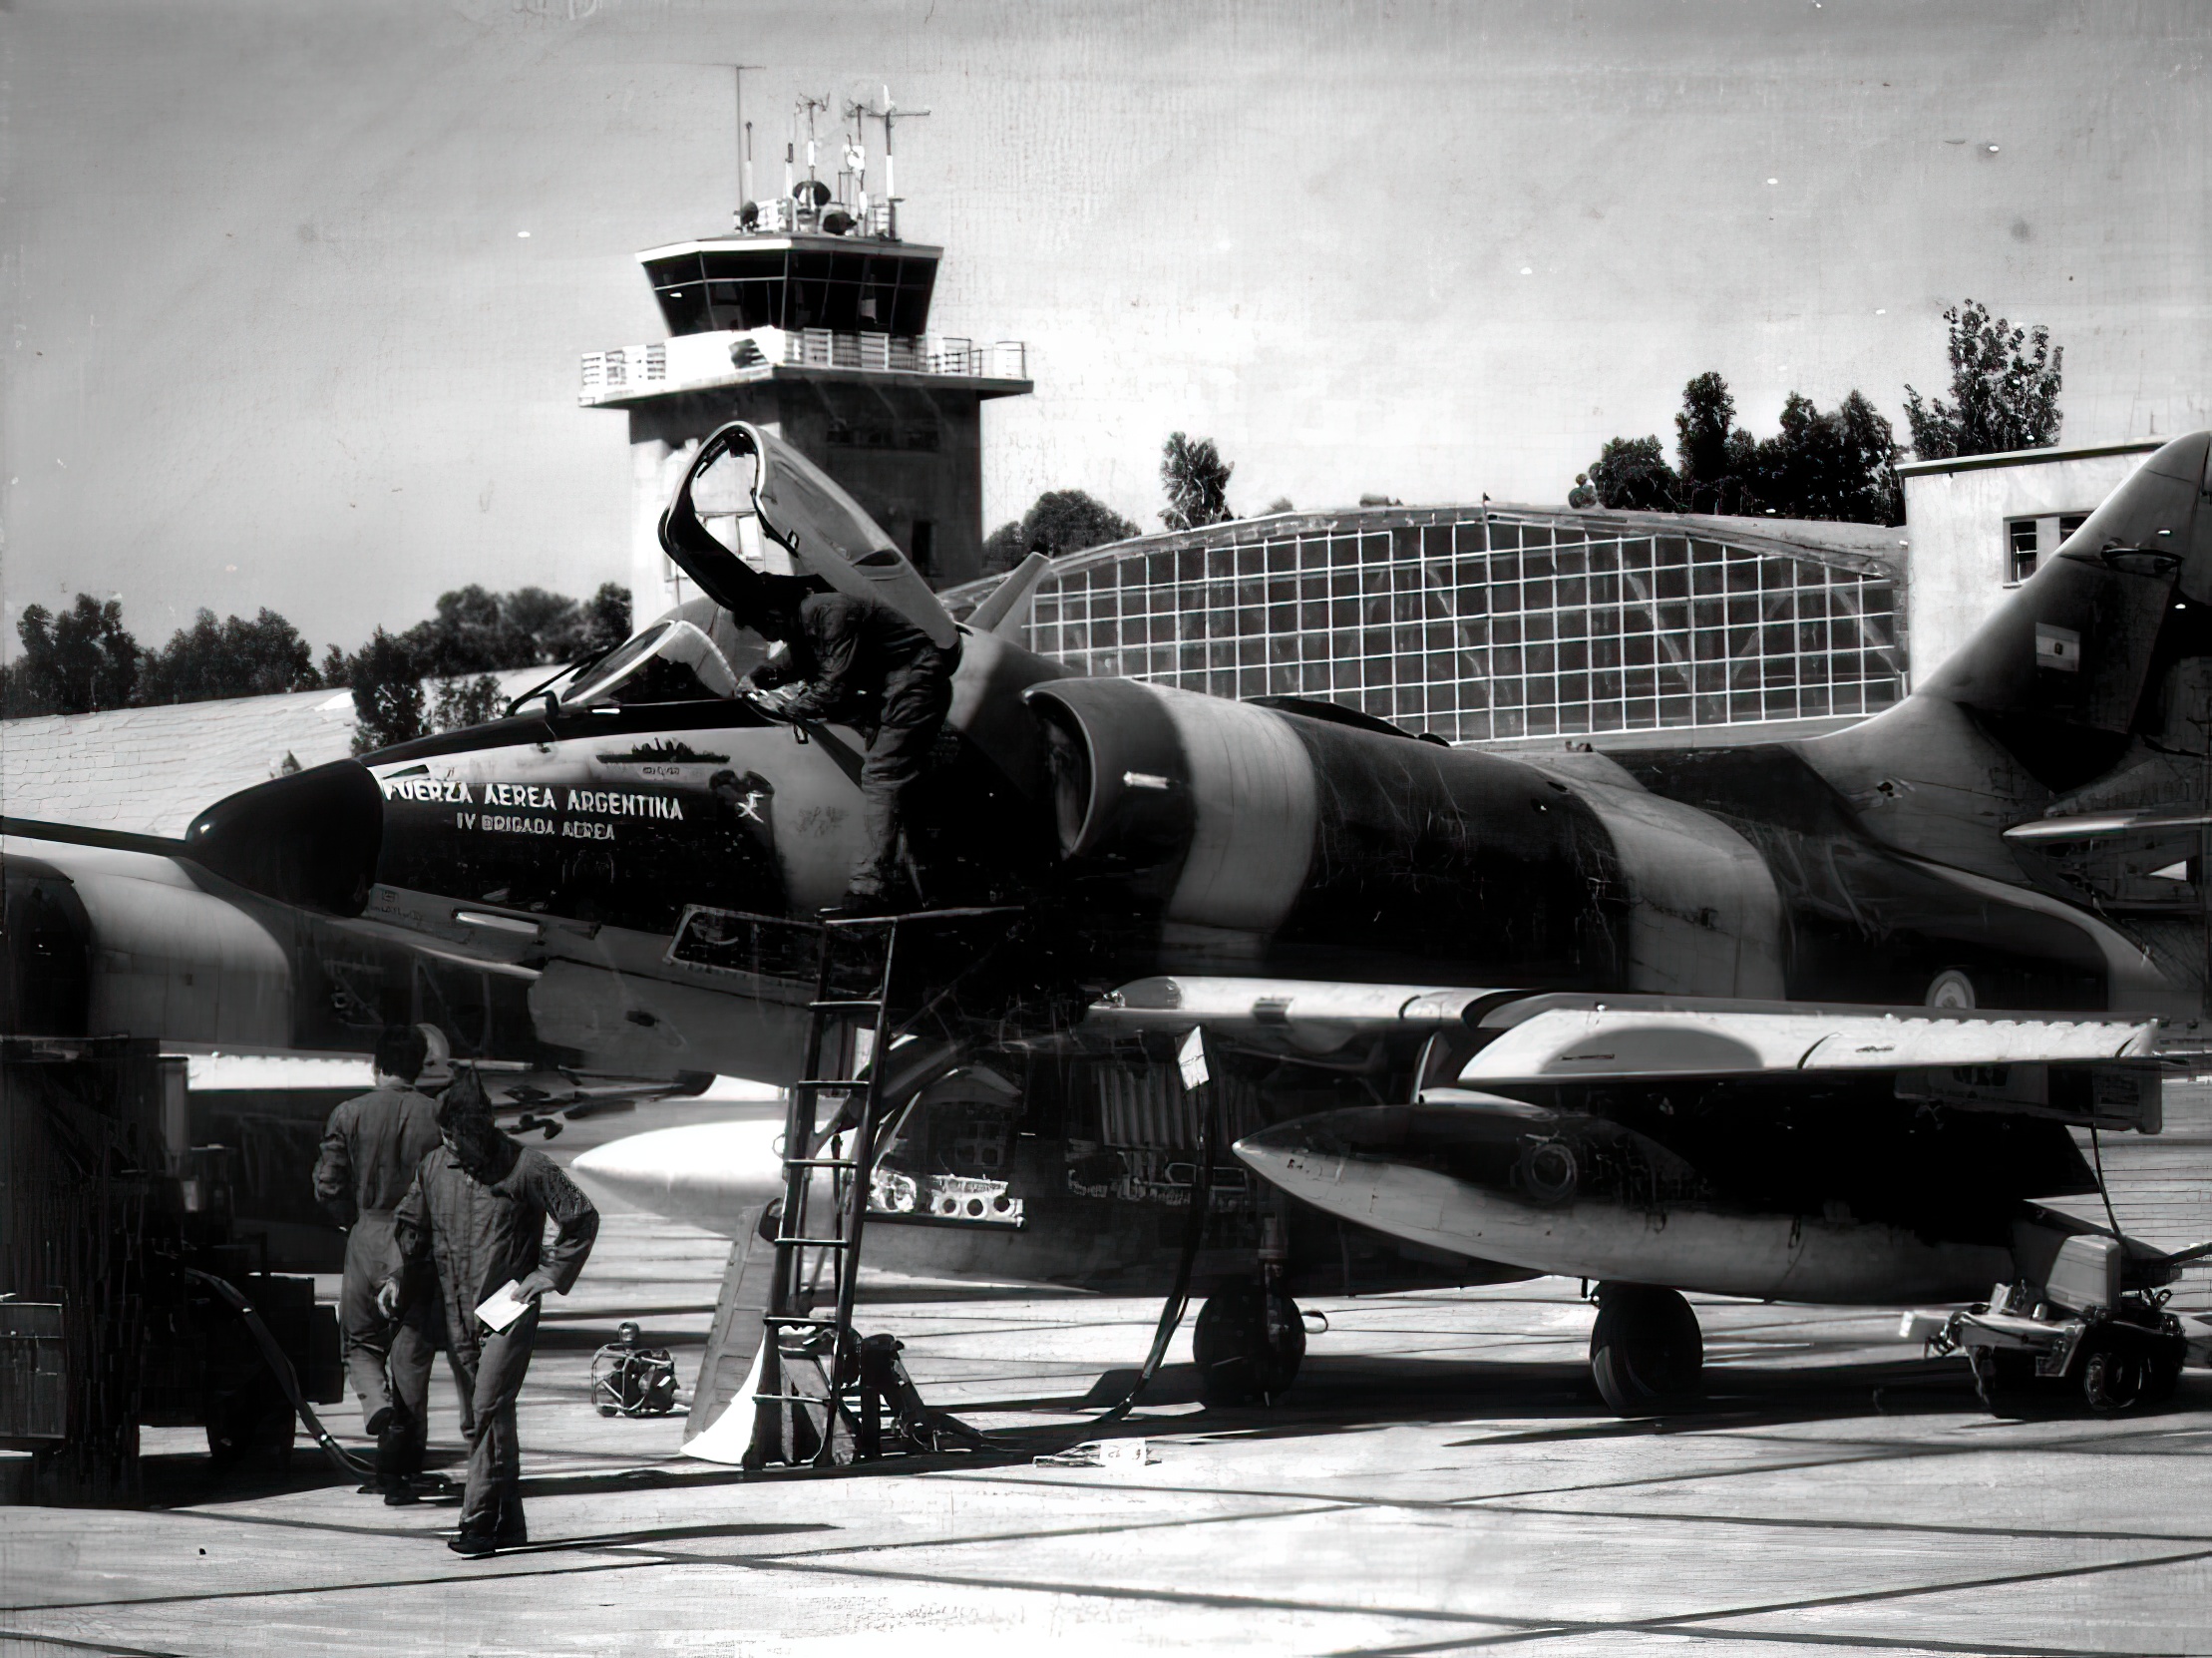 Douglas A-4C Skyhawk from IV Brigada Aérea during the Falklands War